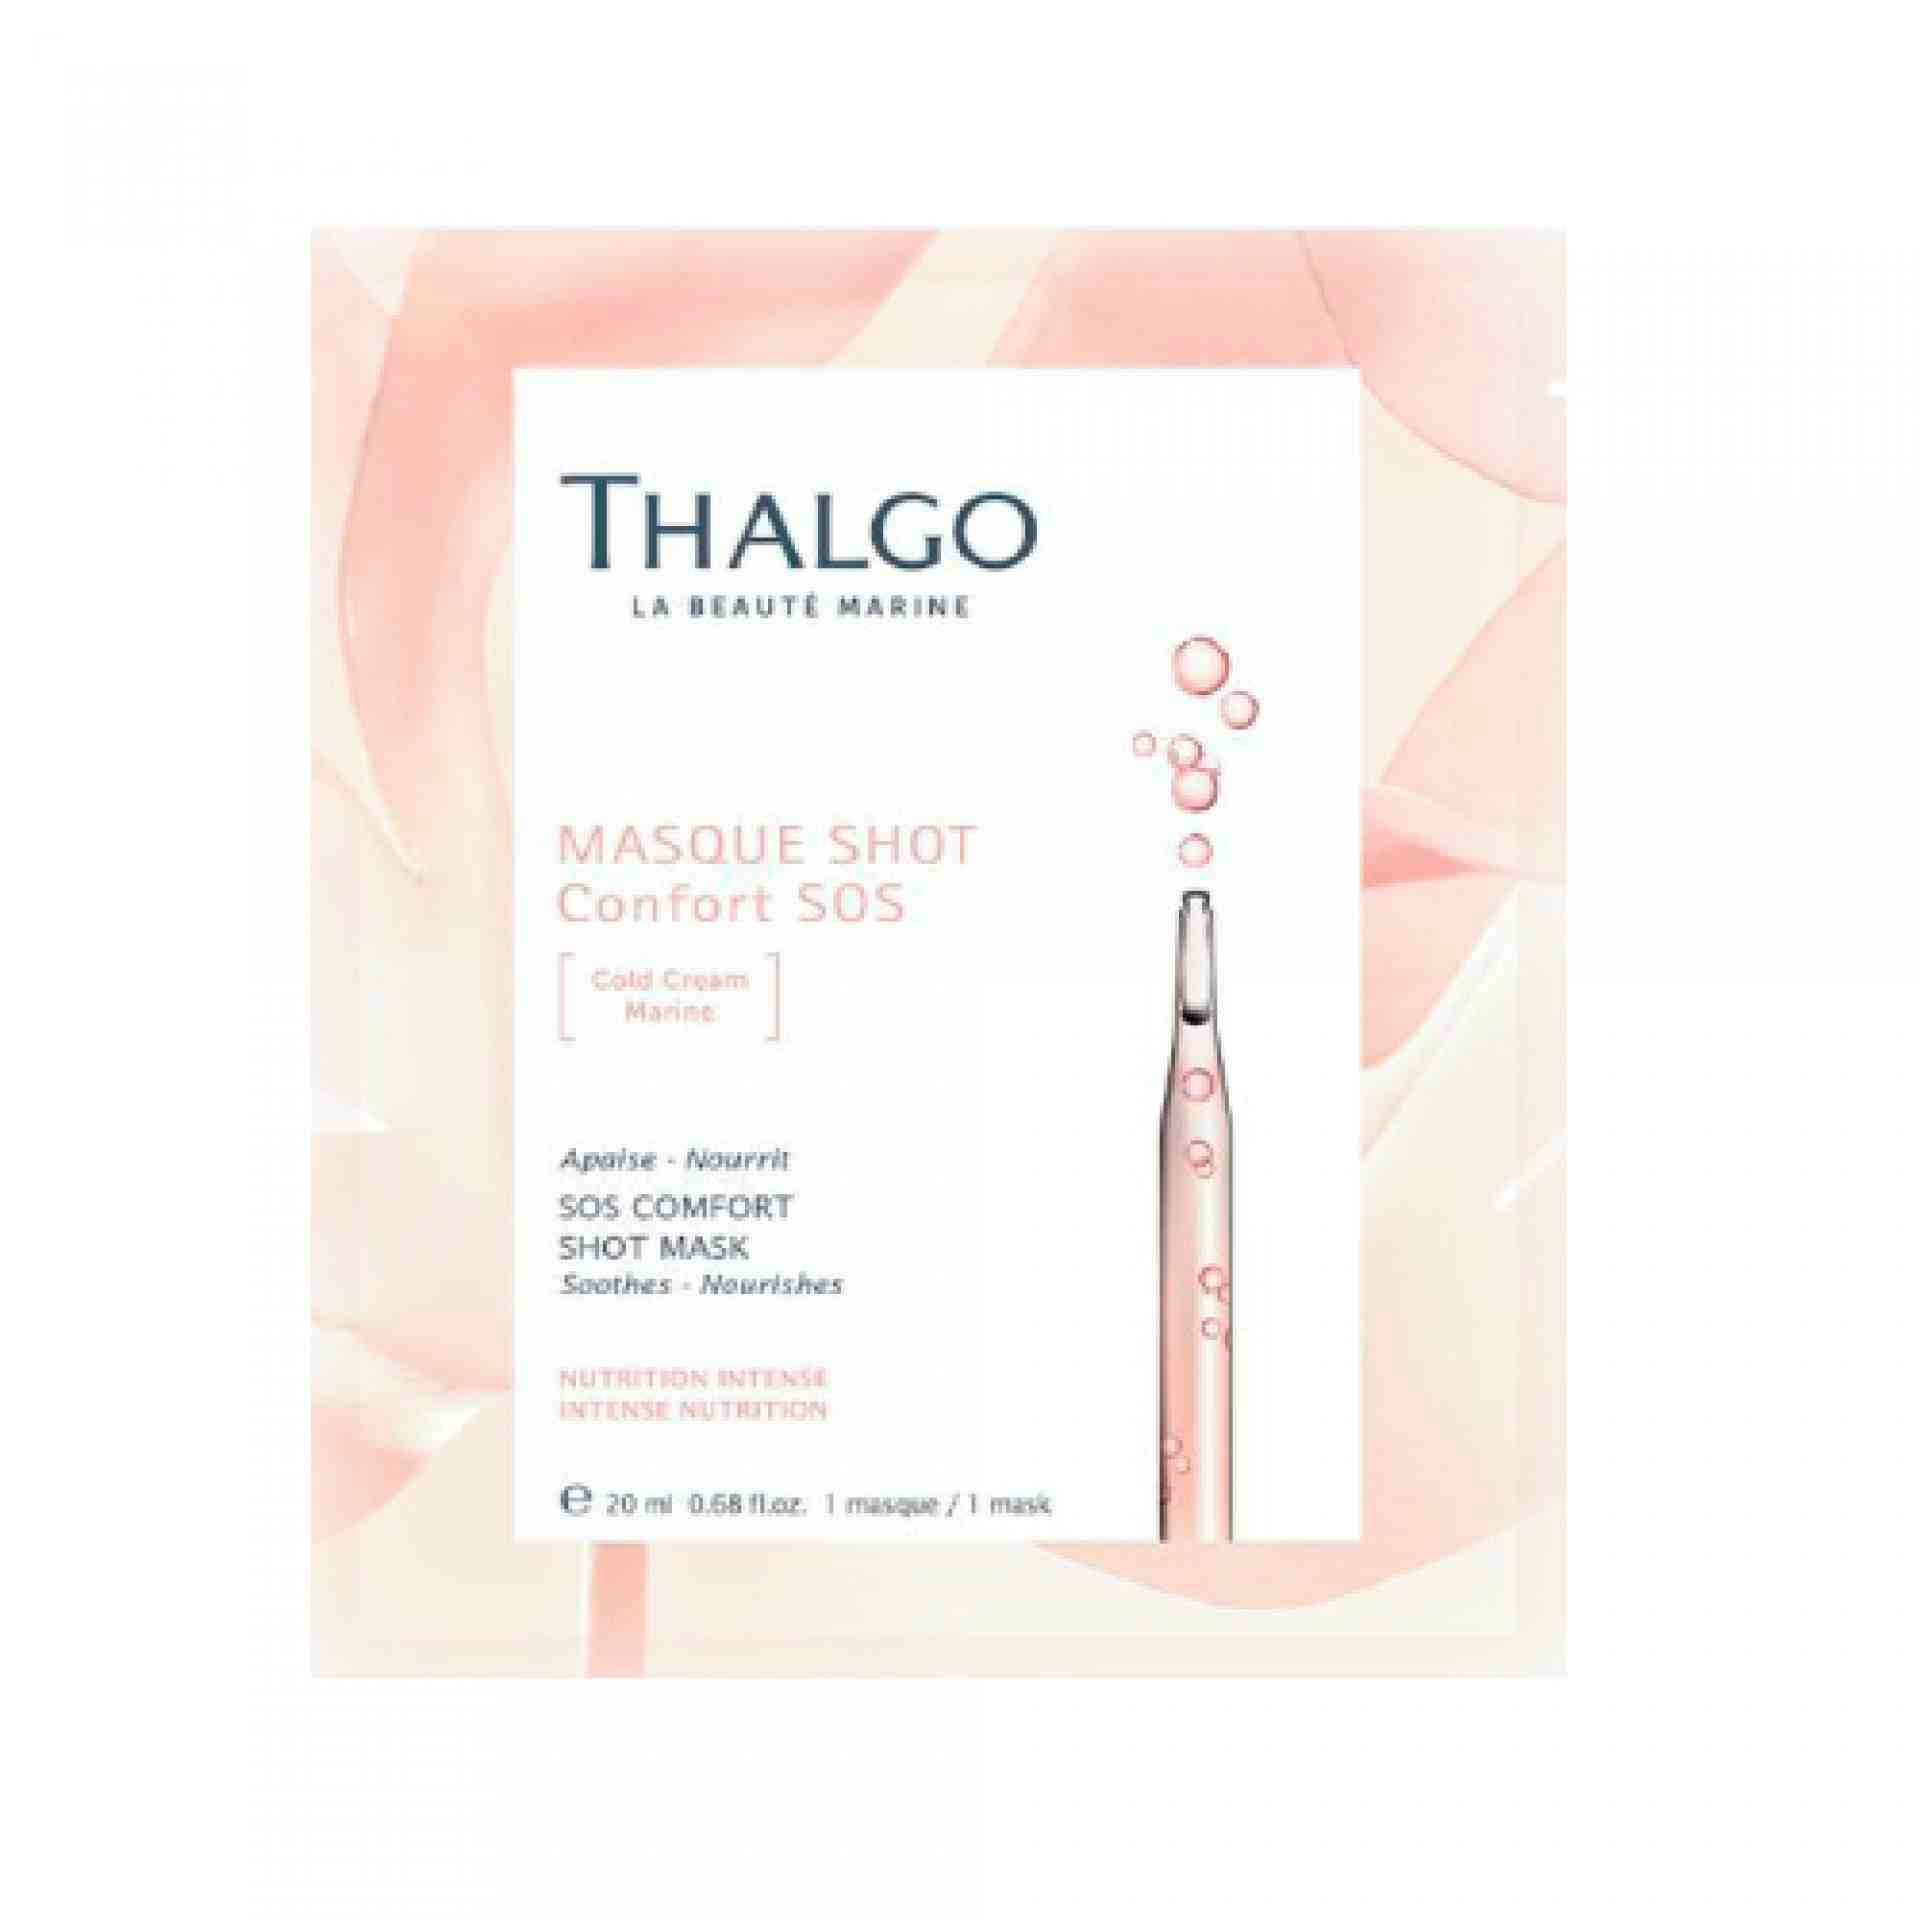 Masque Shot Confort SOS | Mascarilla Facial 20 ml - Cold Cream Marine - Thalgo ®